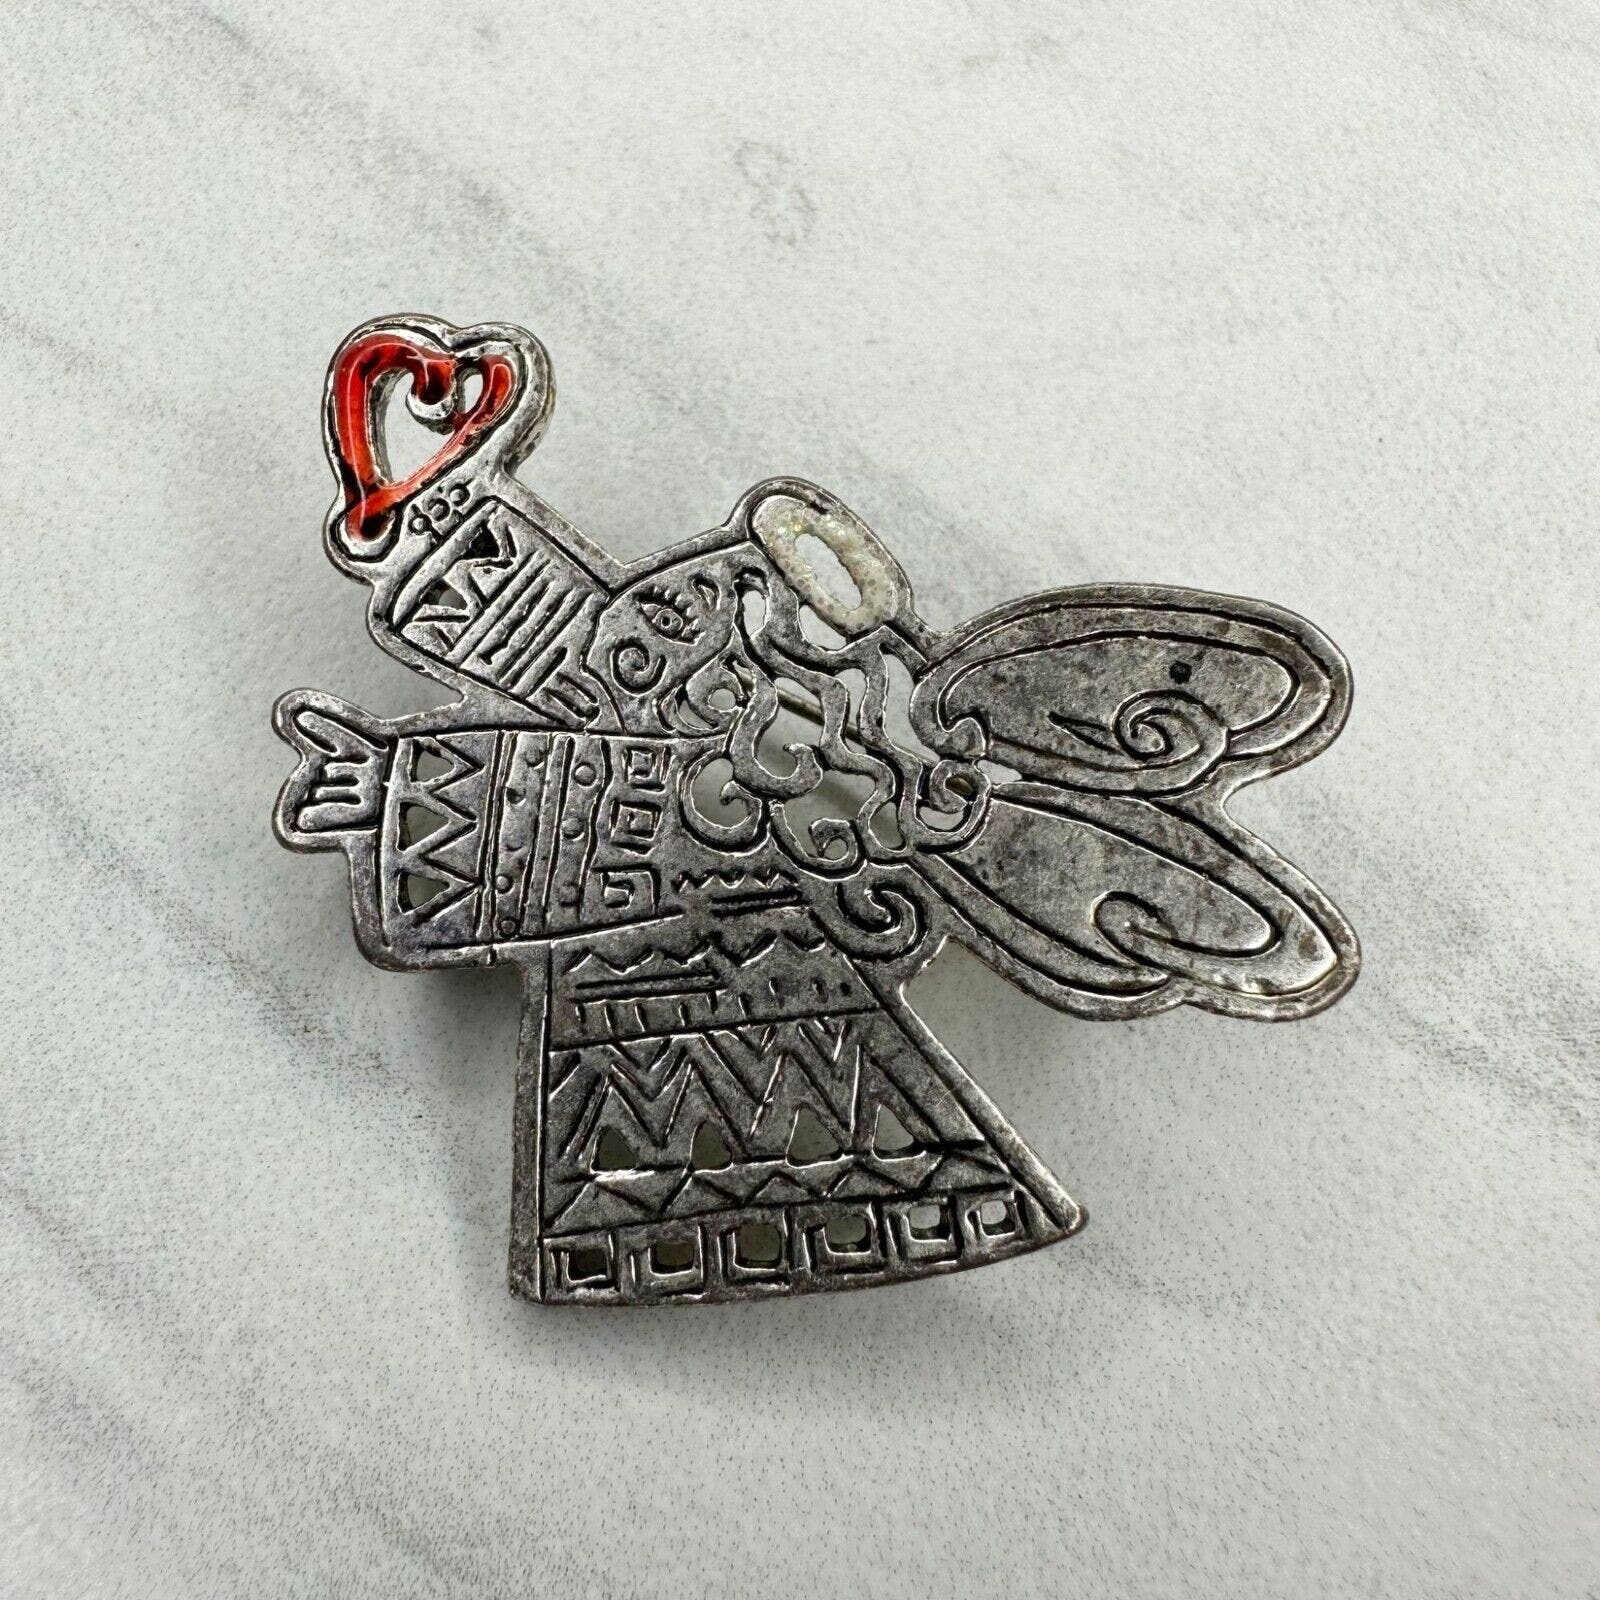 Chico's 2006 Silver Tone Angel Heart Brooch Pin - $9.89